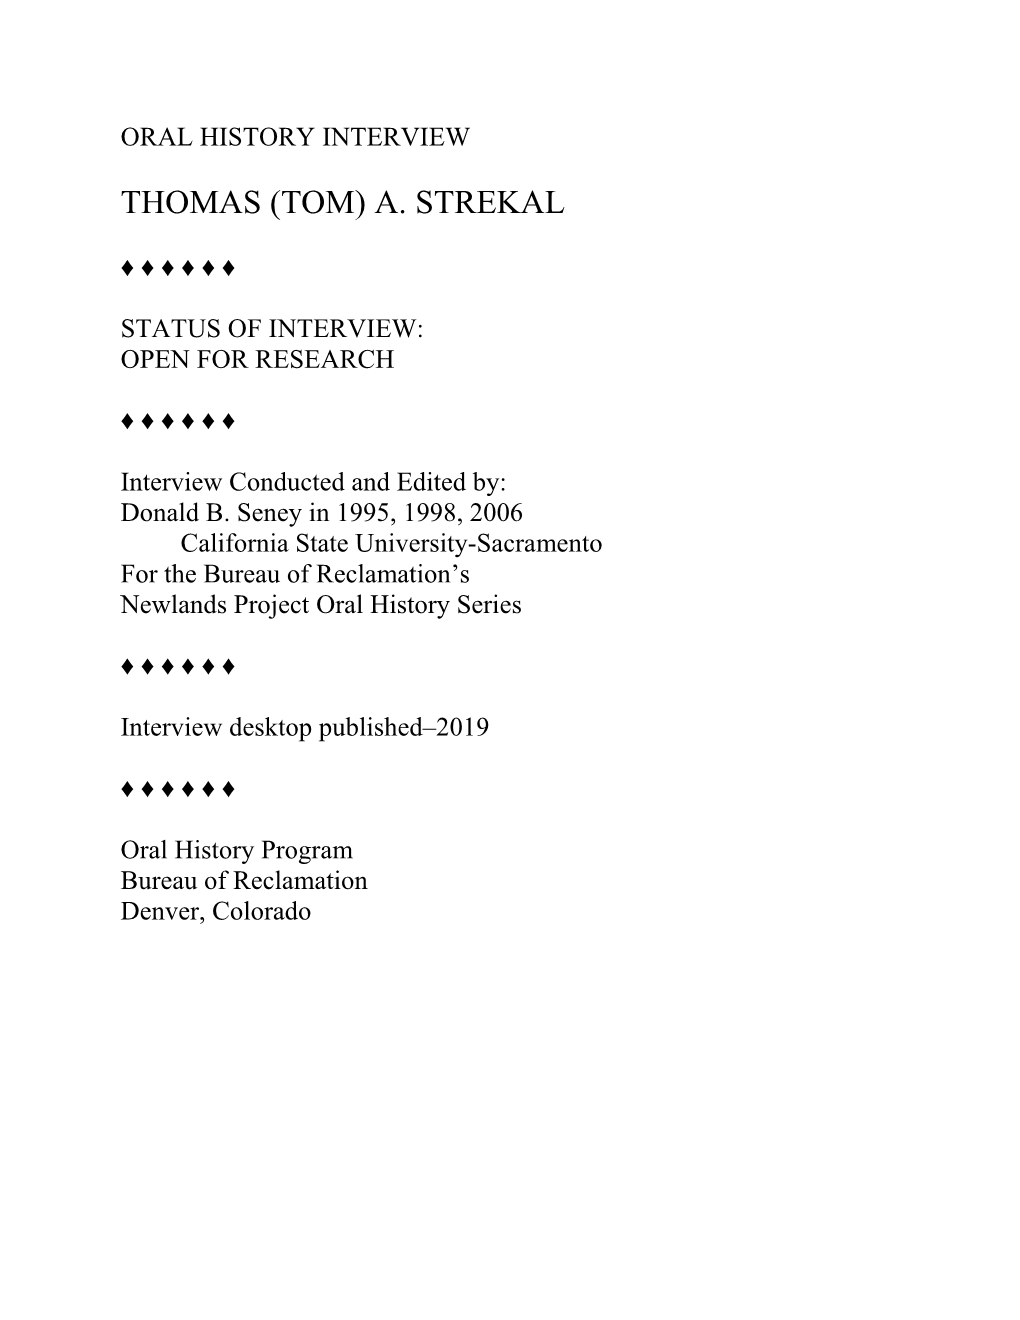 Strekal, Thomas A